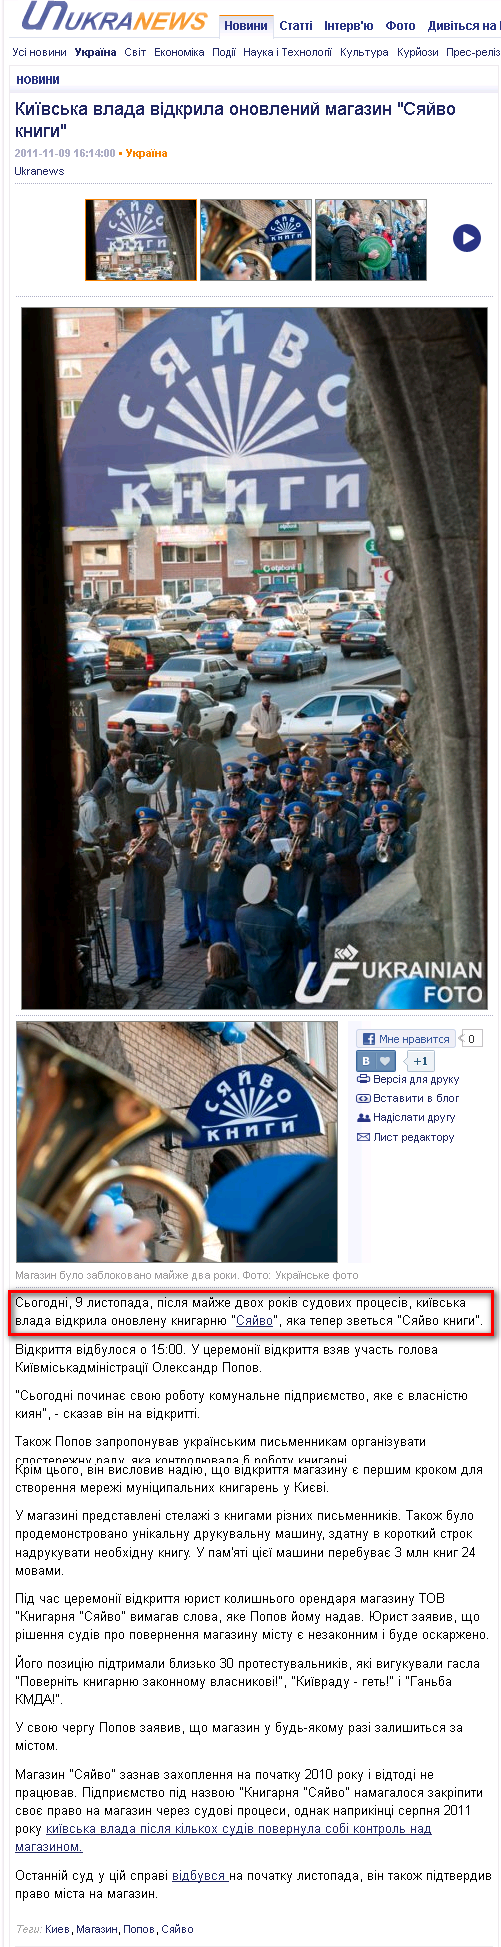 http://ukranews.com/uk/news/ukraine/2011/11/09/57405